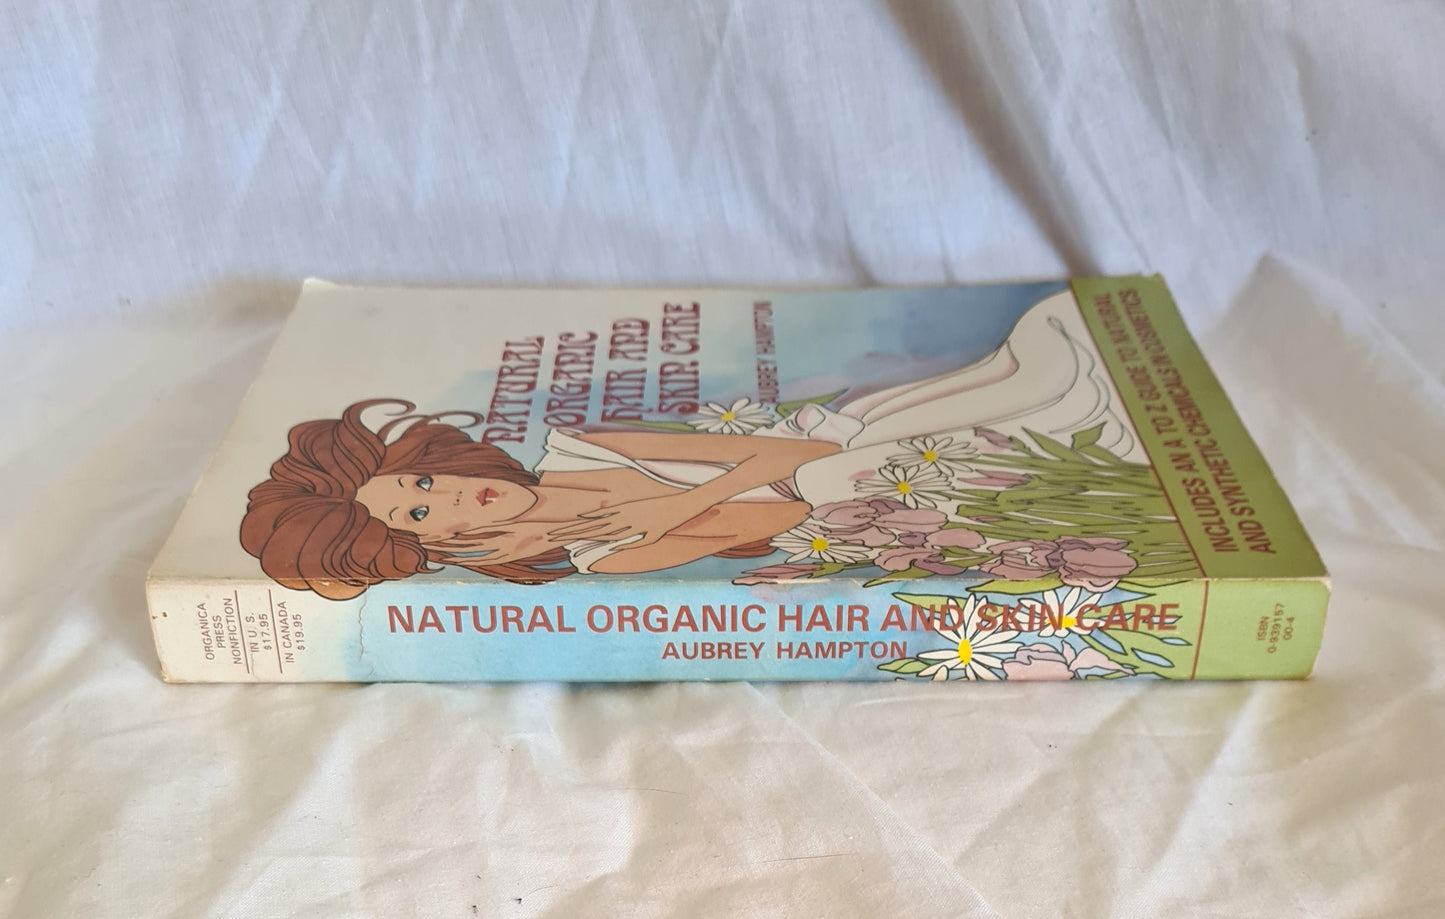 Natural Organic Hair and Skin Care by Aubrey Hampton